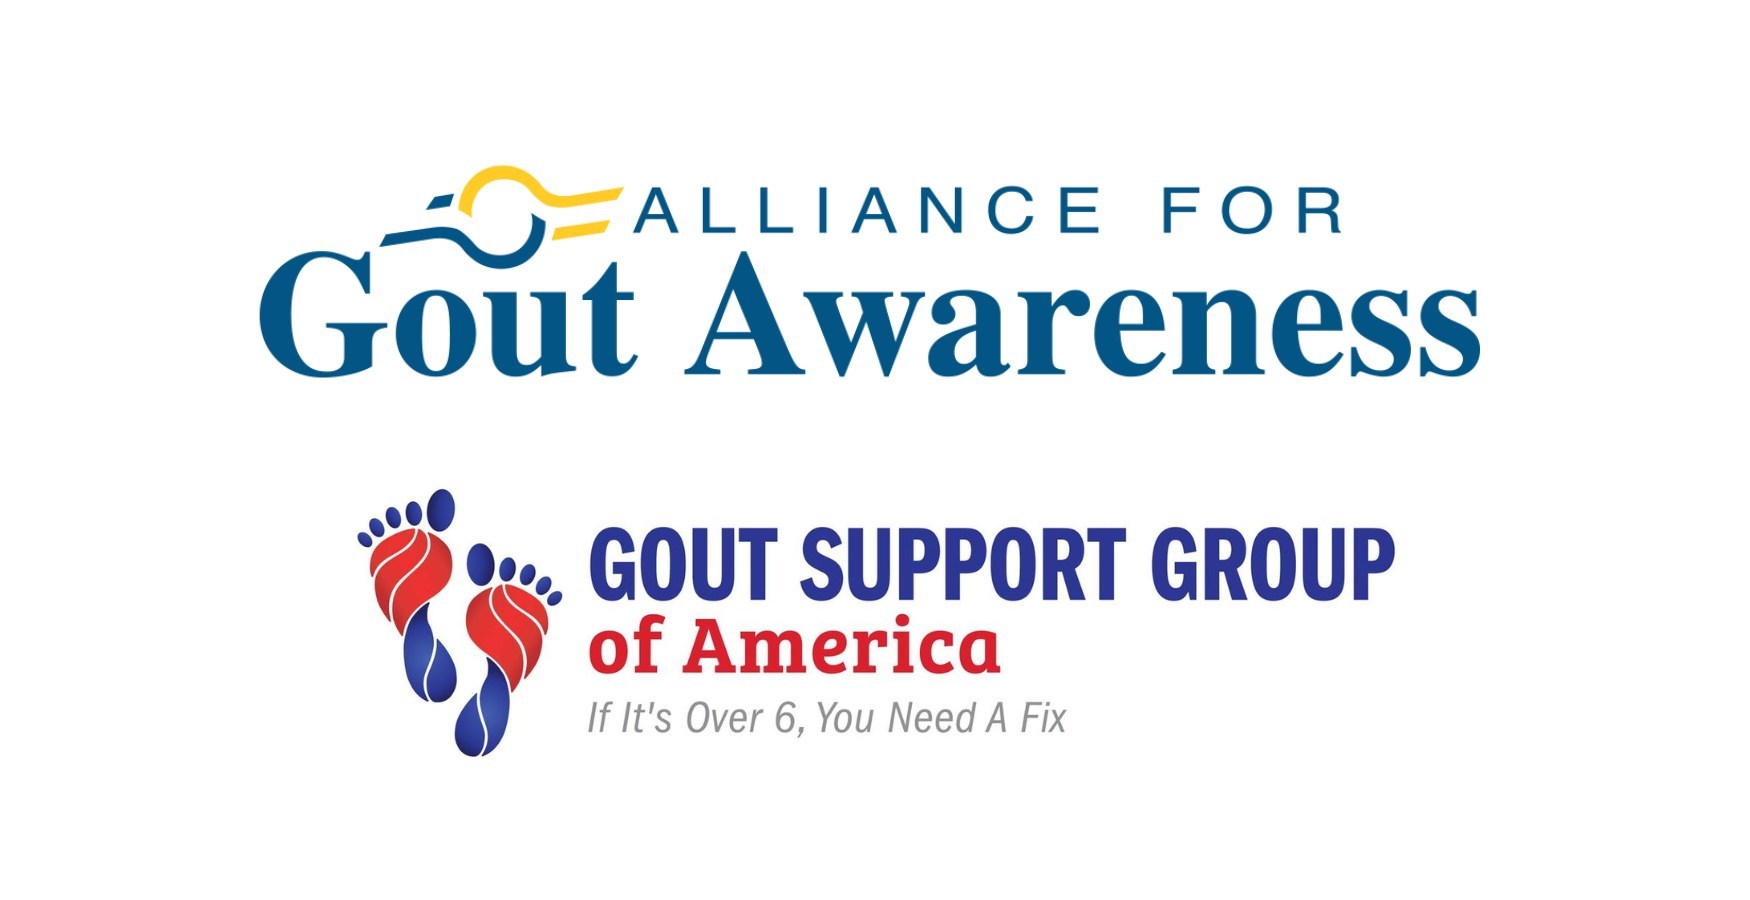 Patient Empowerment Forum in Austin to Address Gout